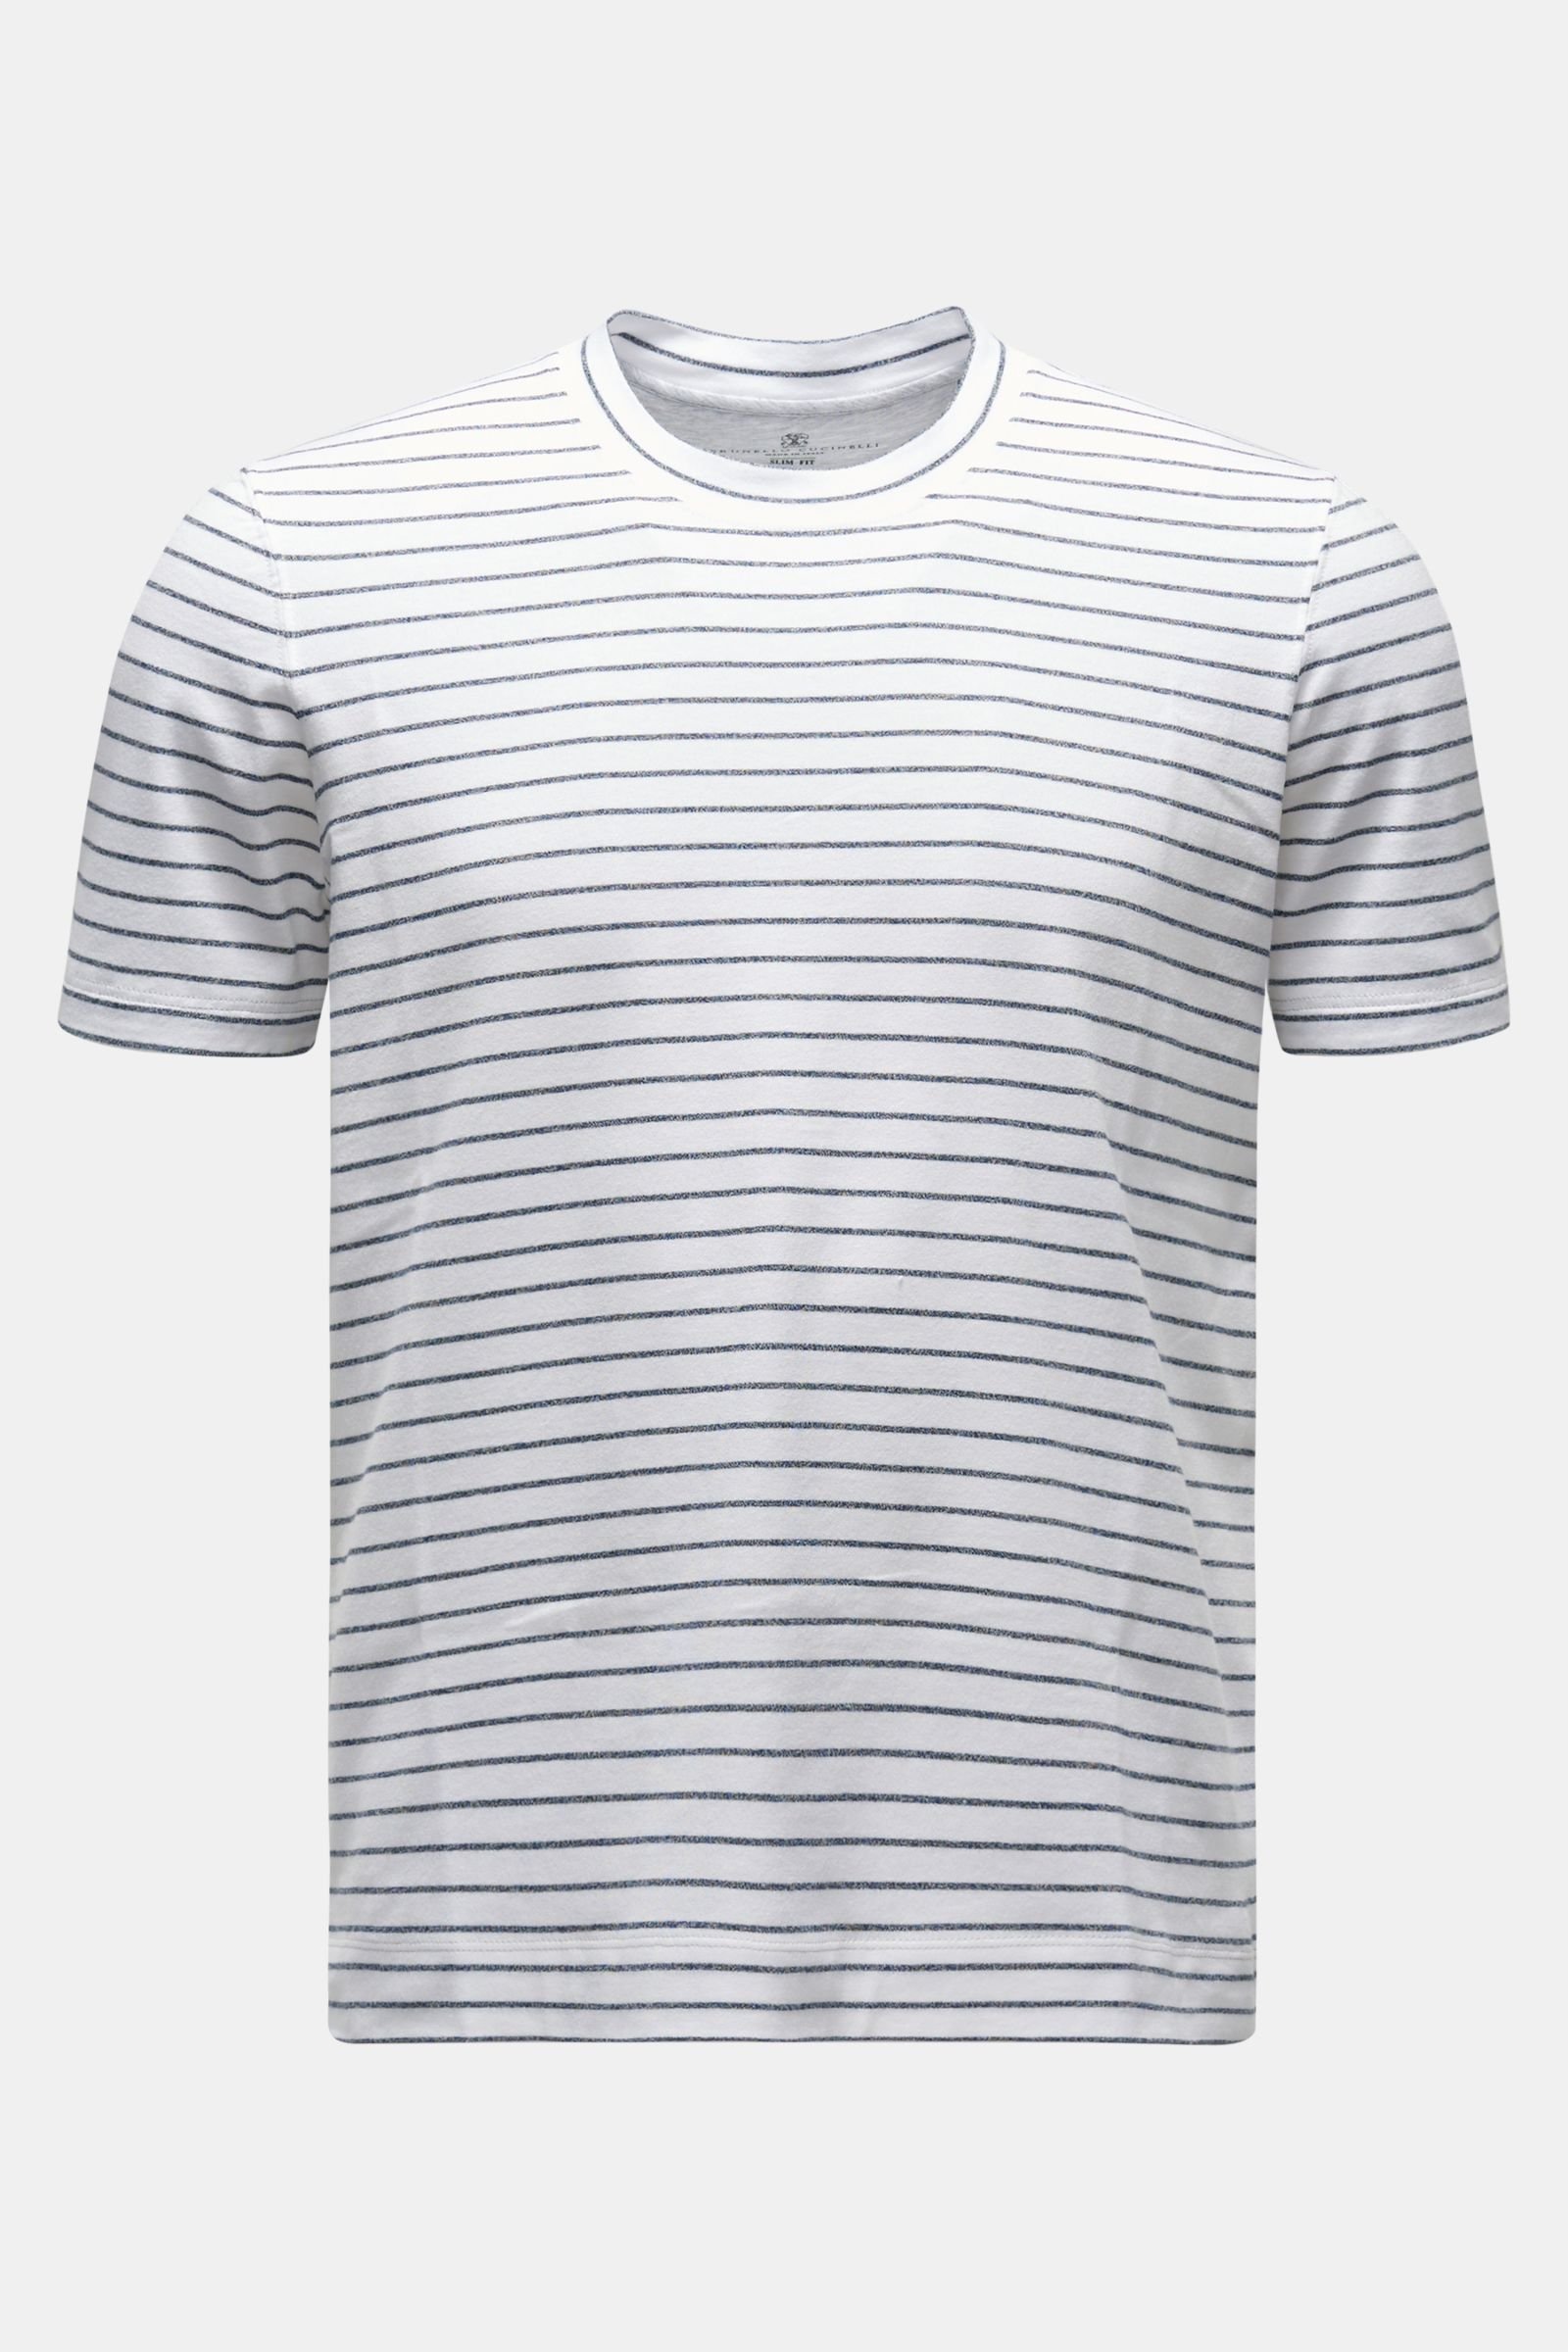 Crew neck T-shirt grey-blue/white striped